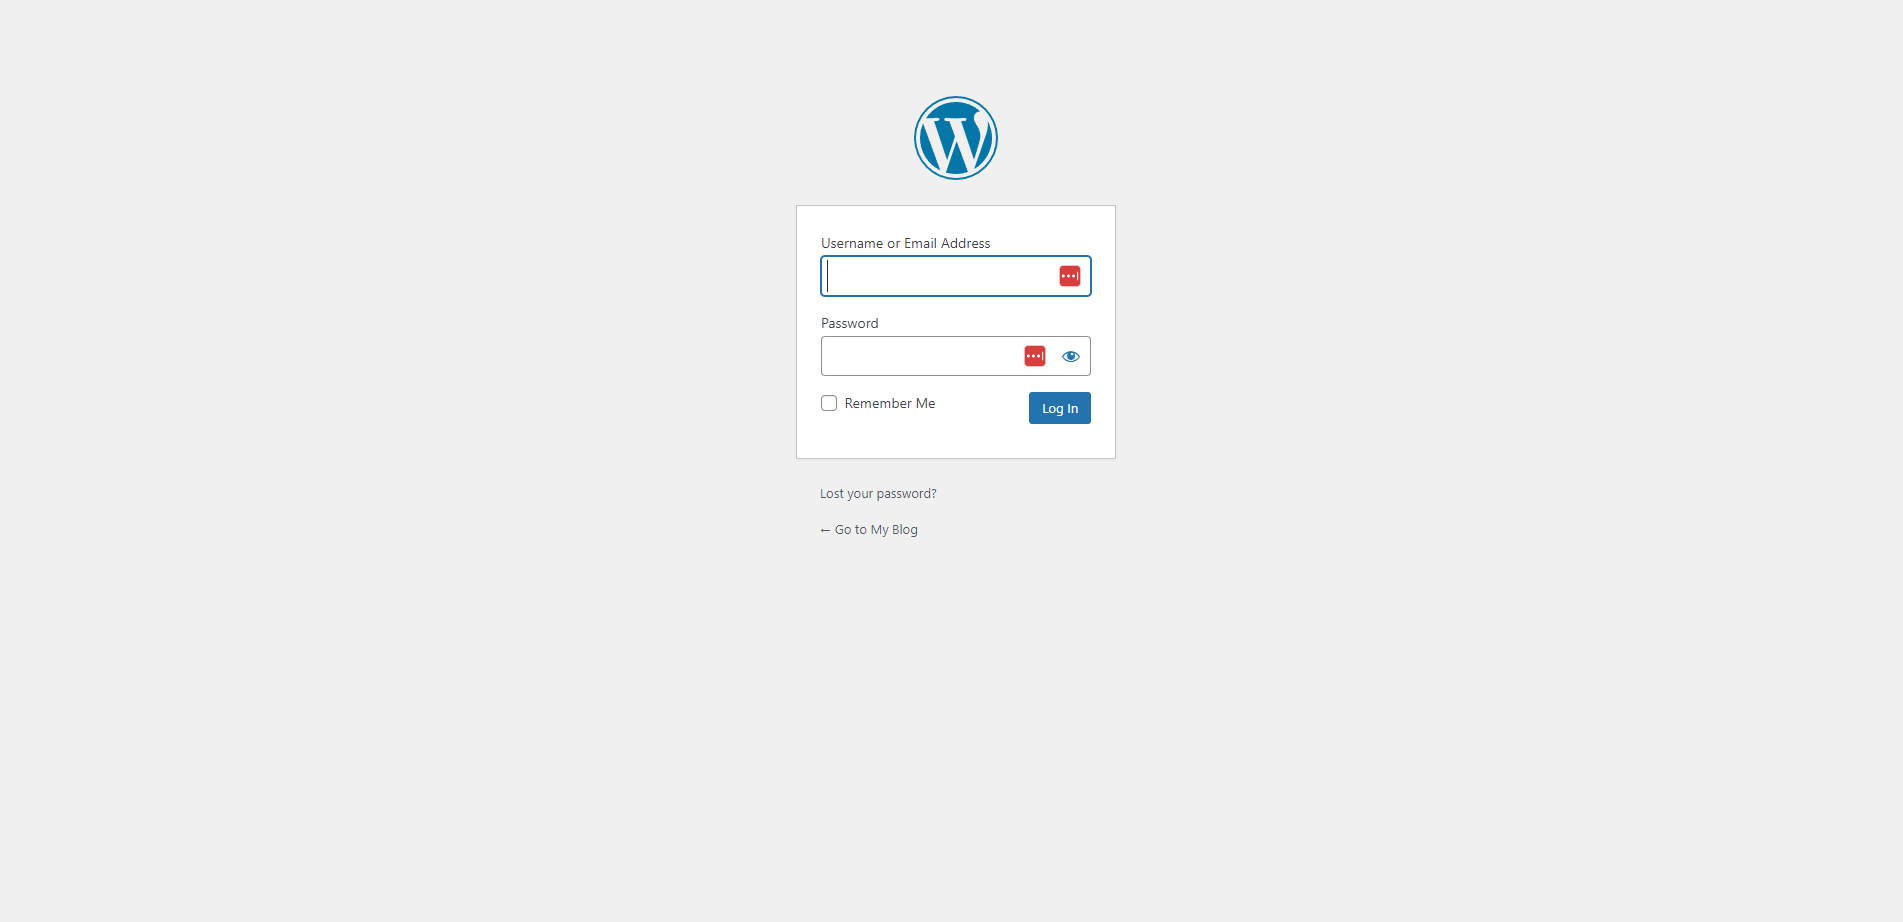 Screenshot of WP login page